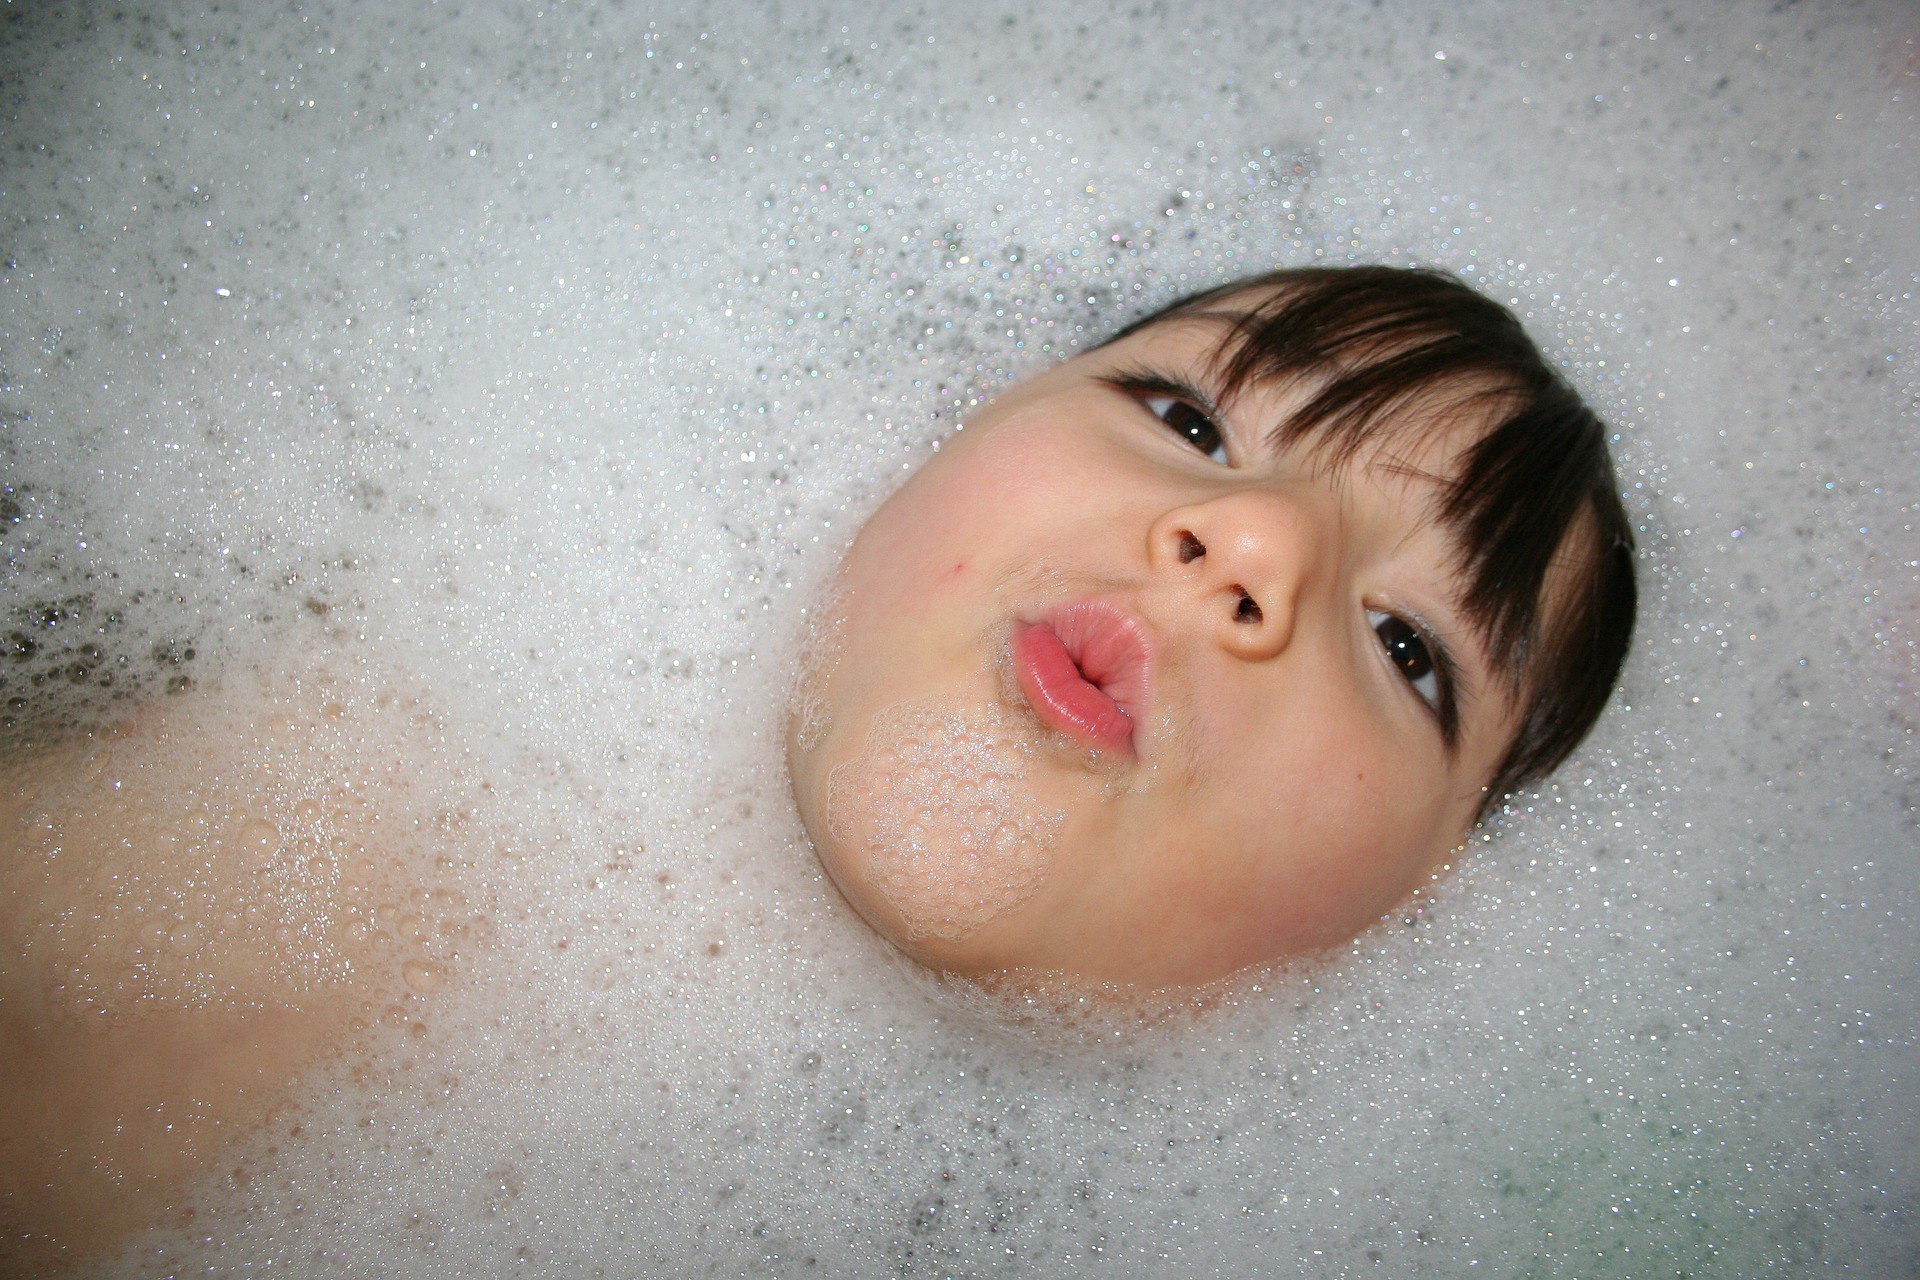 Cabeza de niño saliendo de baño de espuma